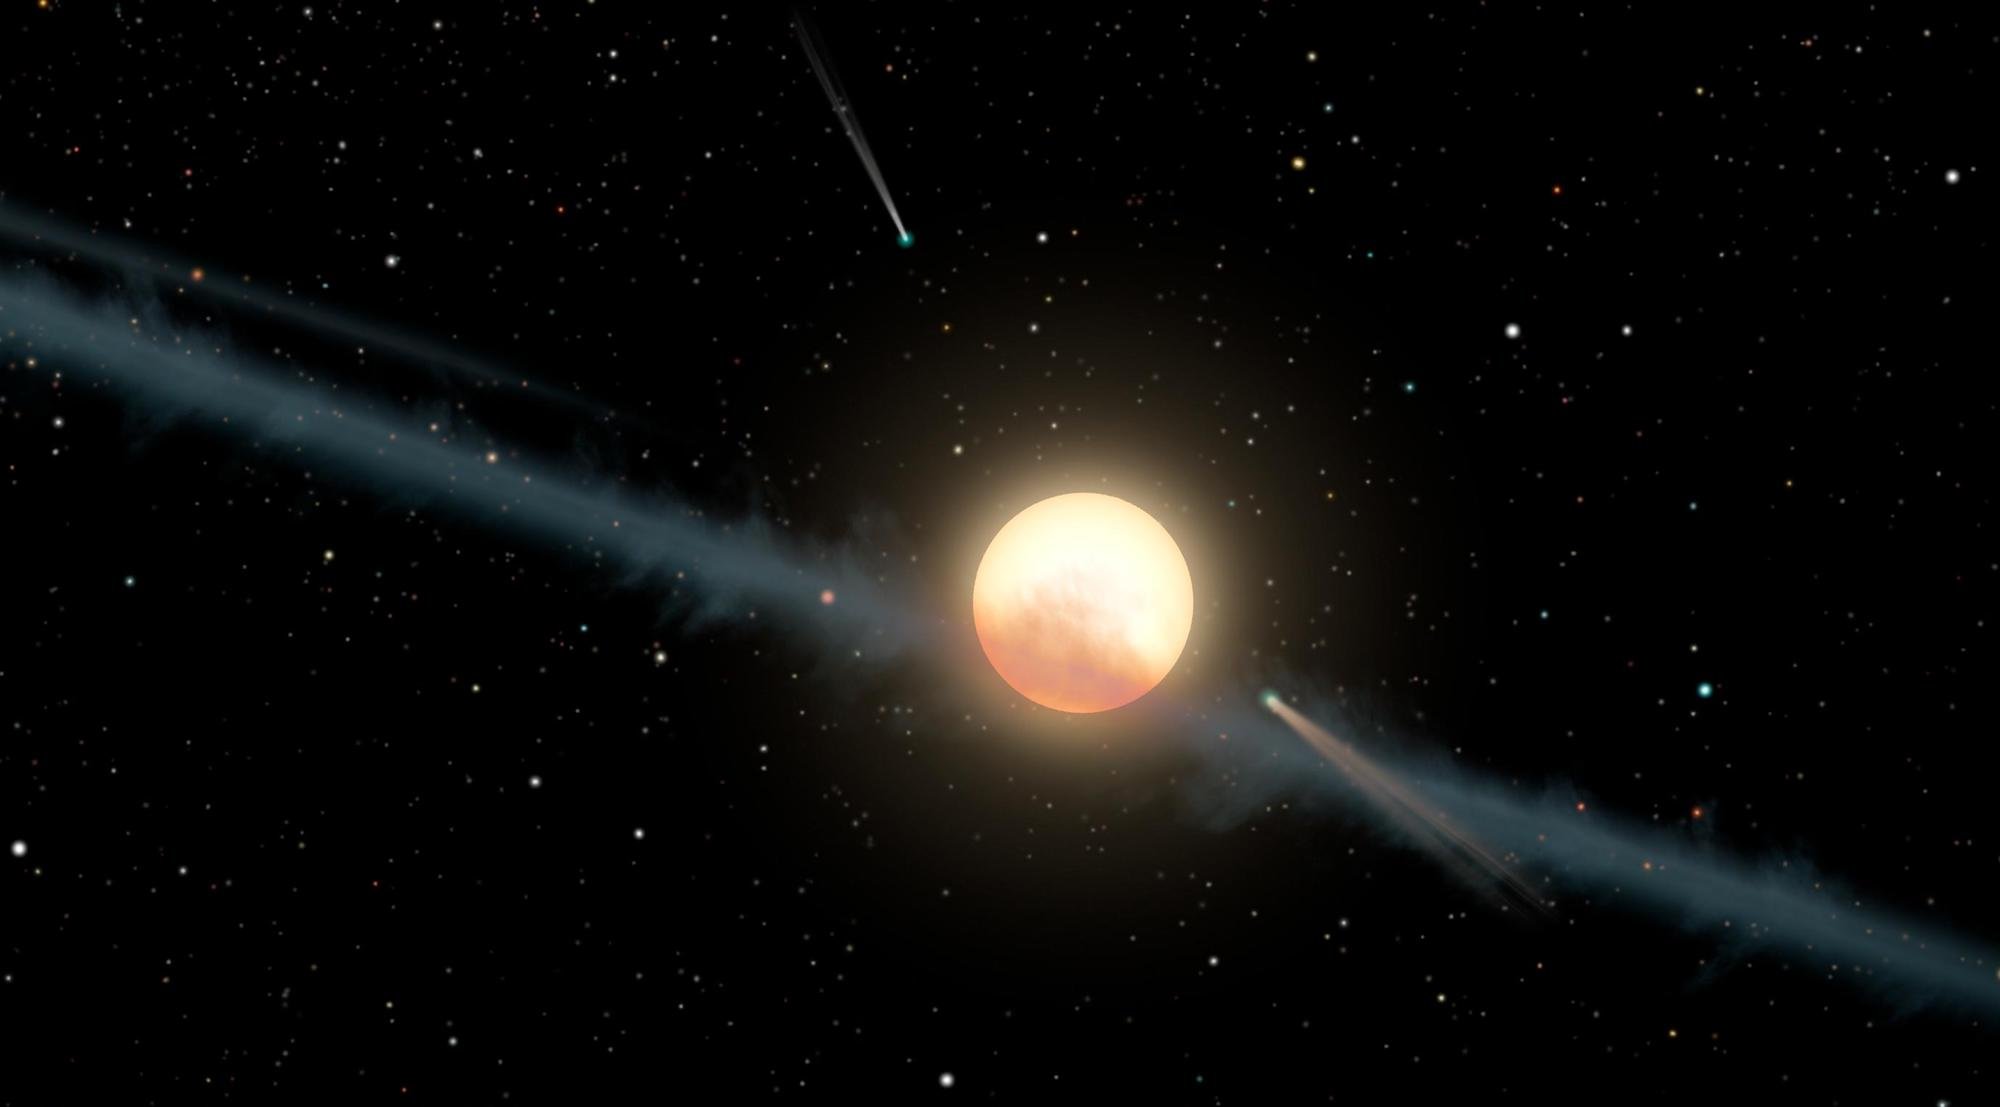 tabbys-star-alien-megastructure-kic-8462852-nasa-jpl-caltech-pia22081-cropped.jpg